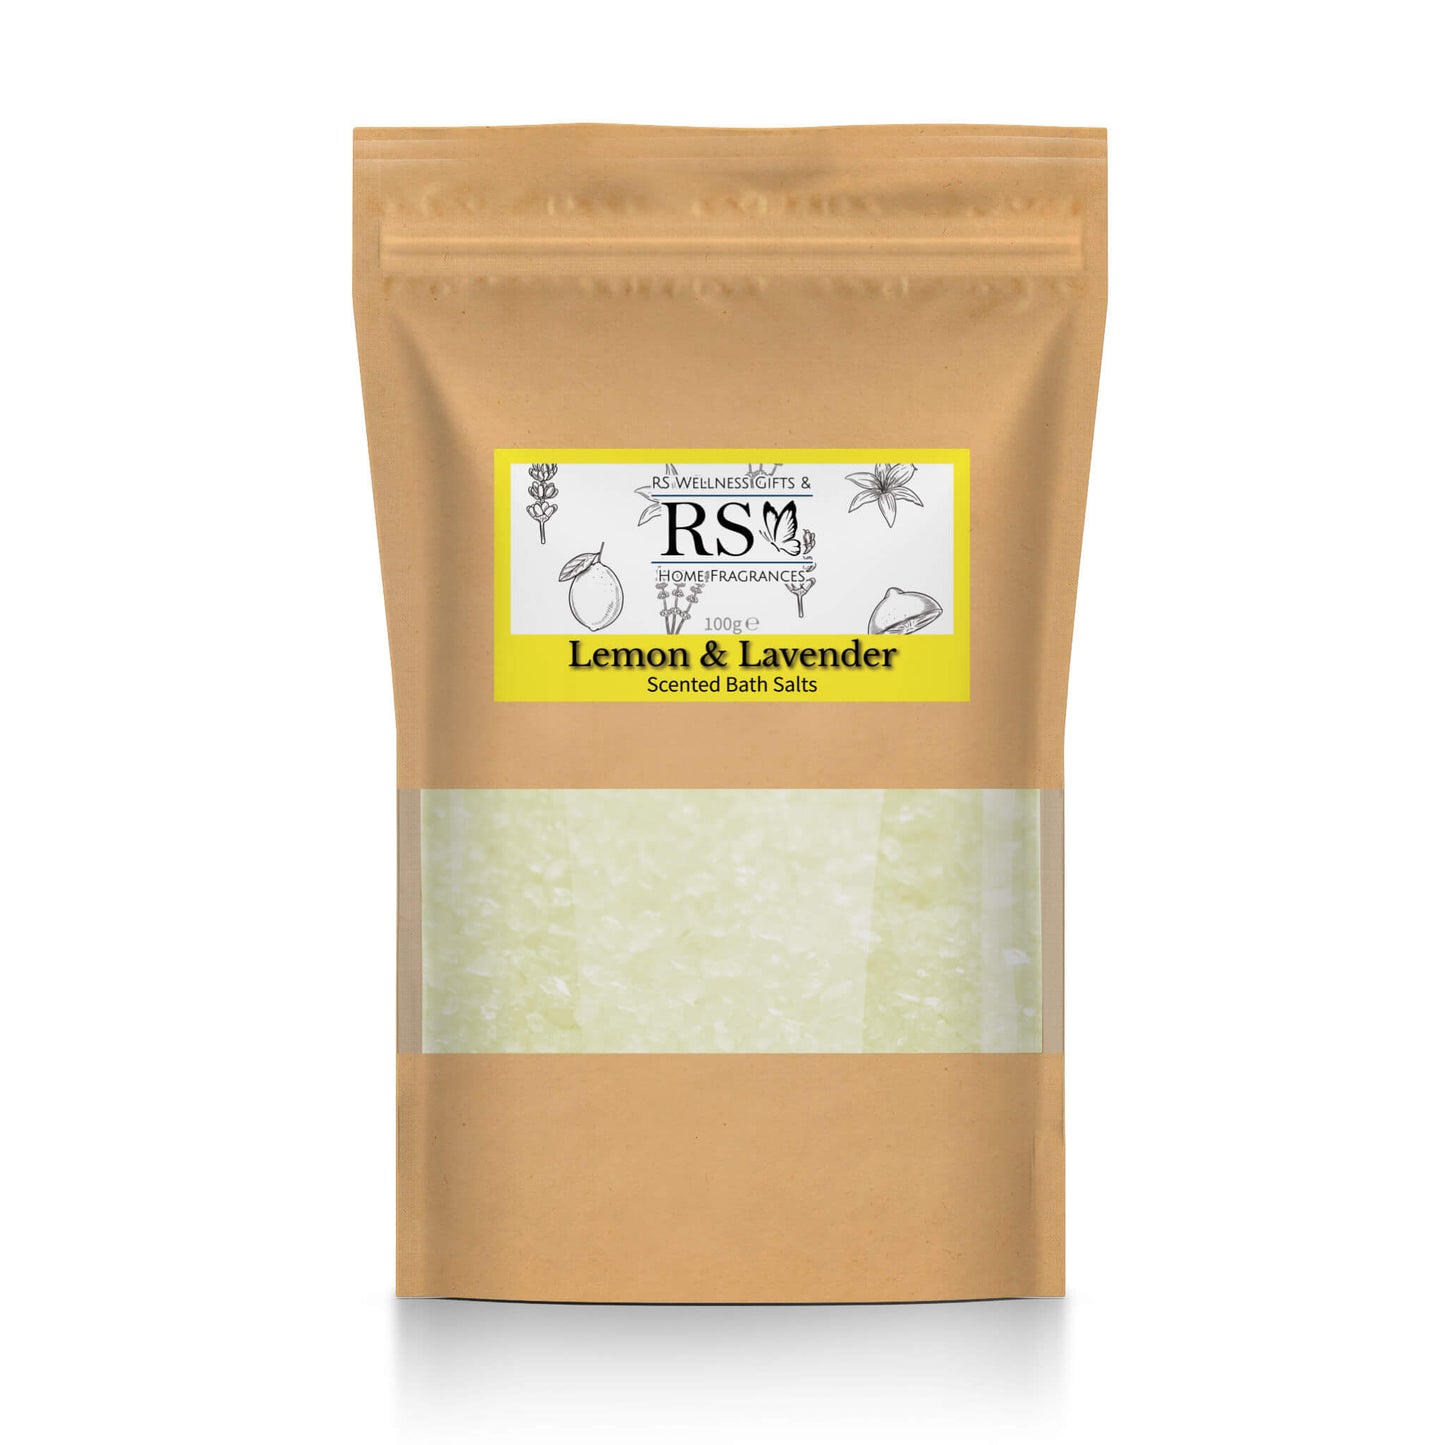 Lemon & Lavender Scented Bath Salts